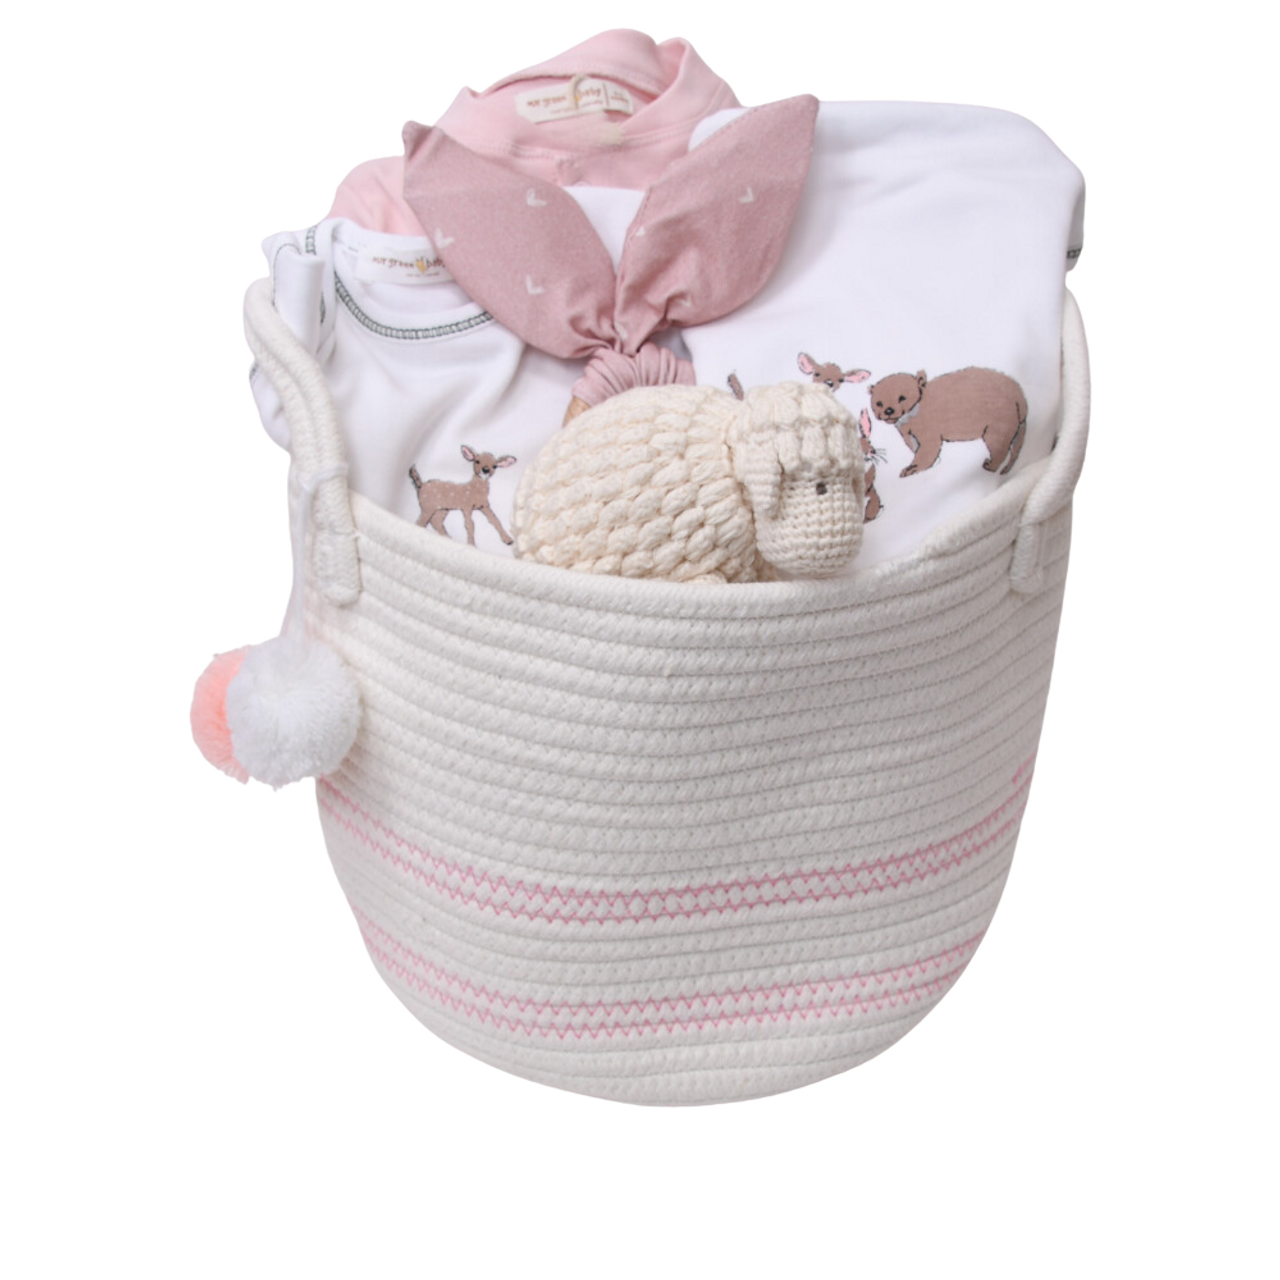 New Baby Girl Gift Basket - Meadow Buddies